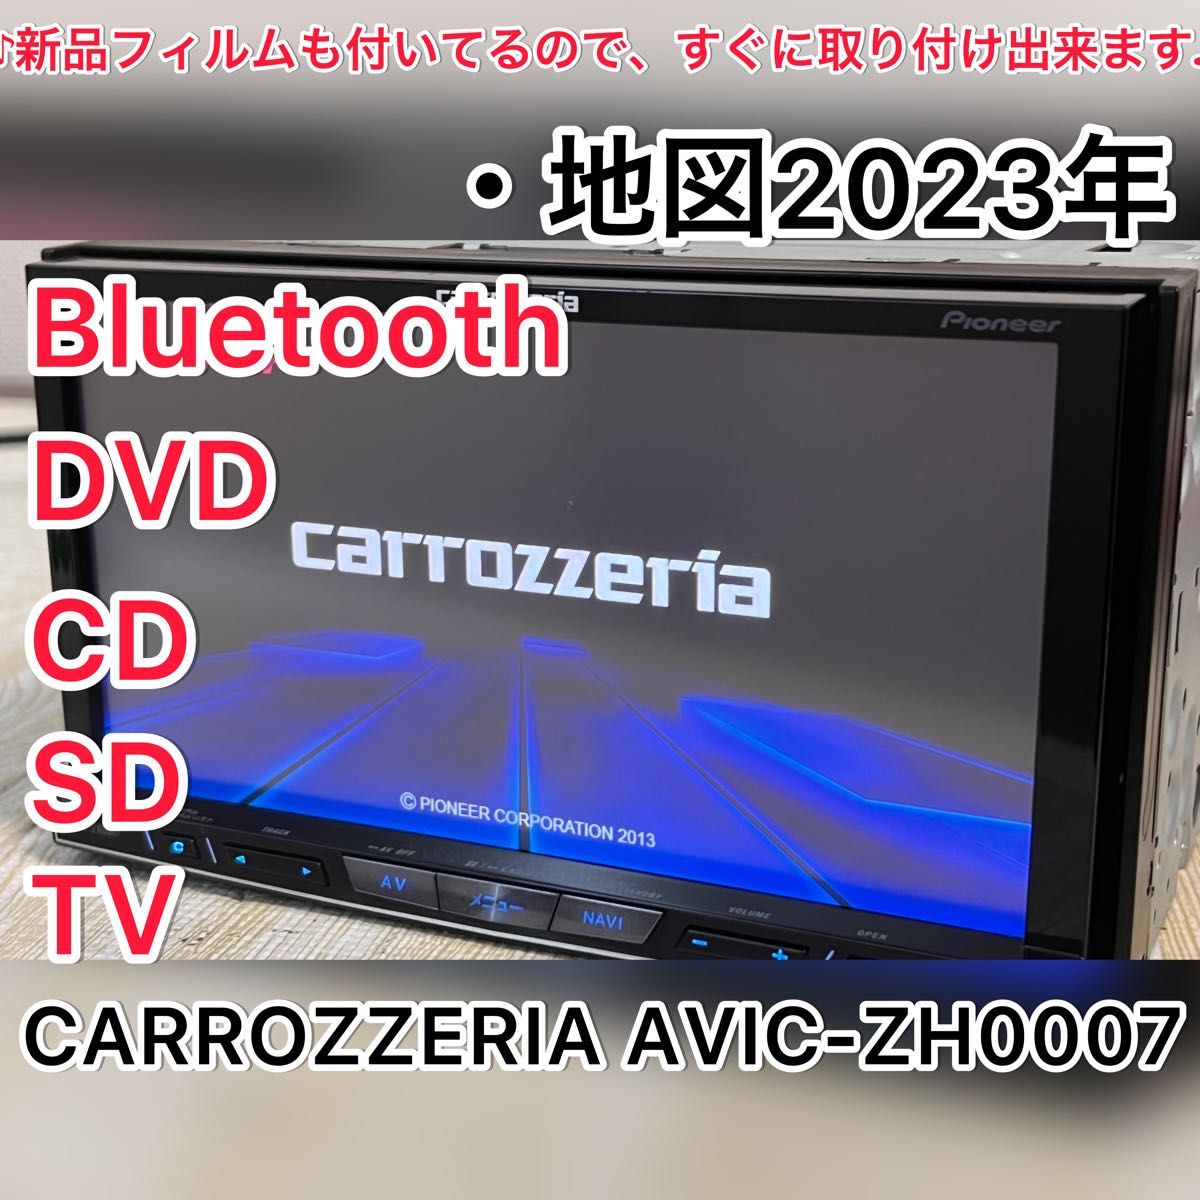 CARROZZERIA AVIC-ZH0007 Bluetooth DVD(D)